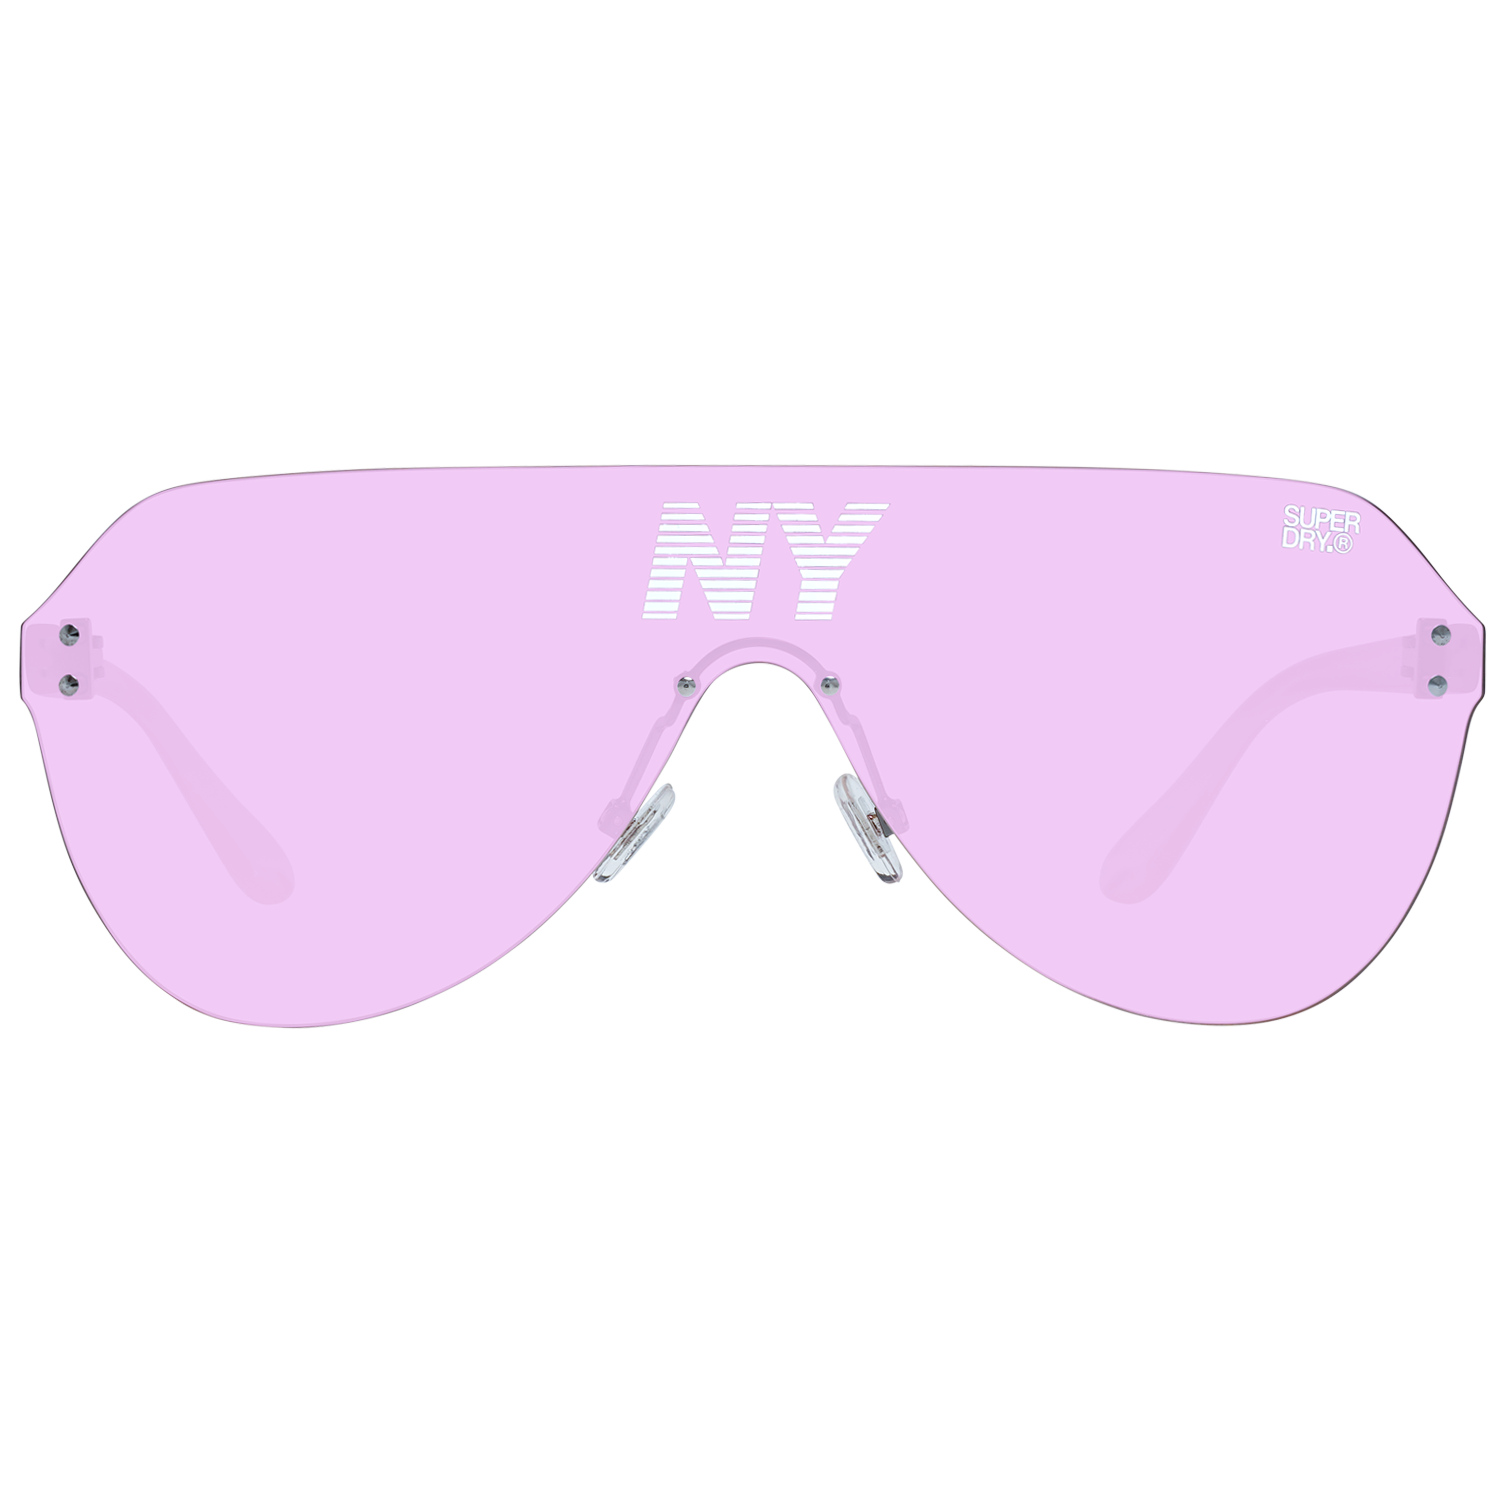 Superdry Sunglasses Superdry Sunglasses SDS Monovector 172 14 Eyeglasses Eyewear UK USA Australia 